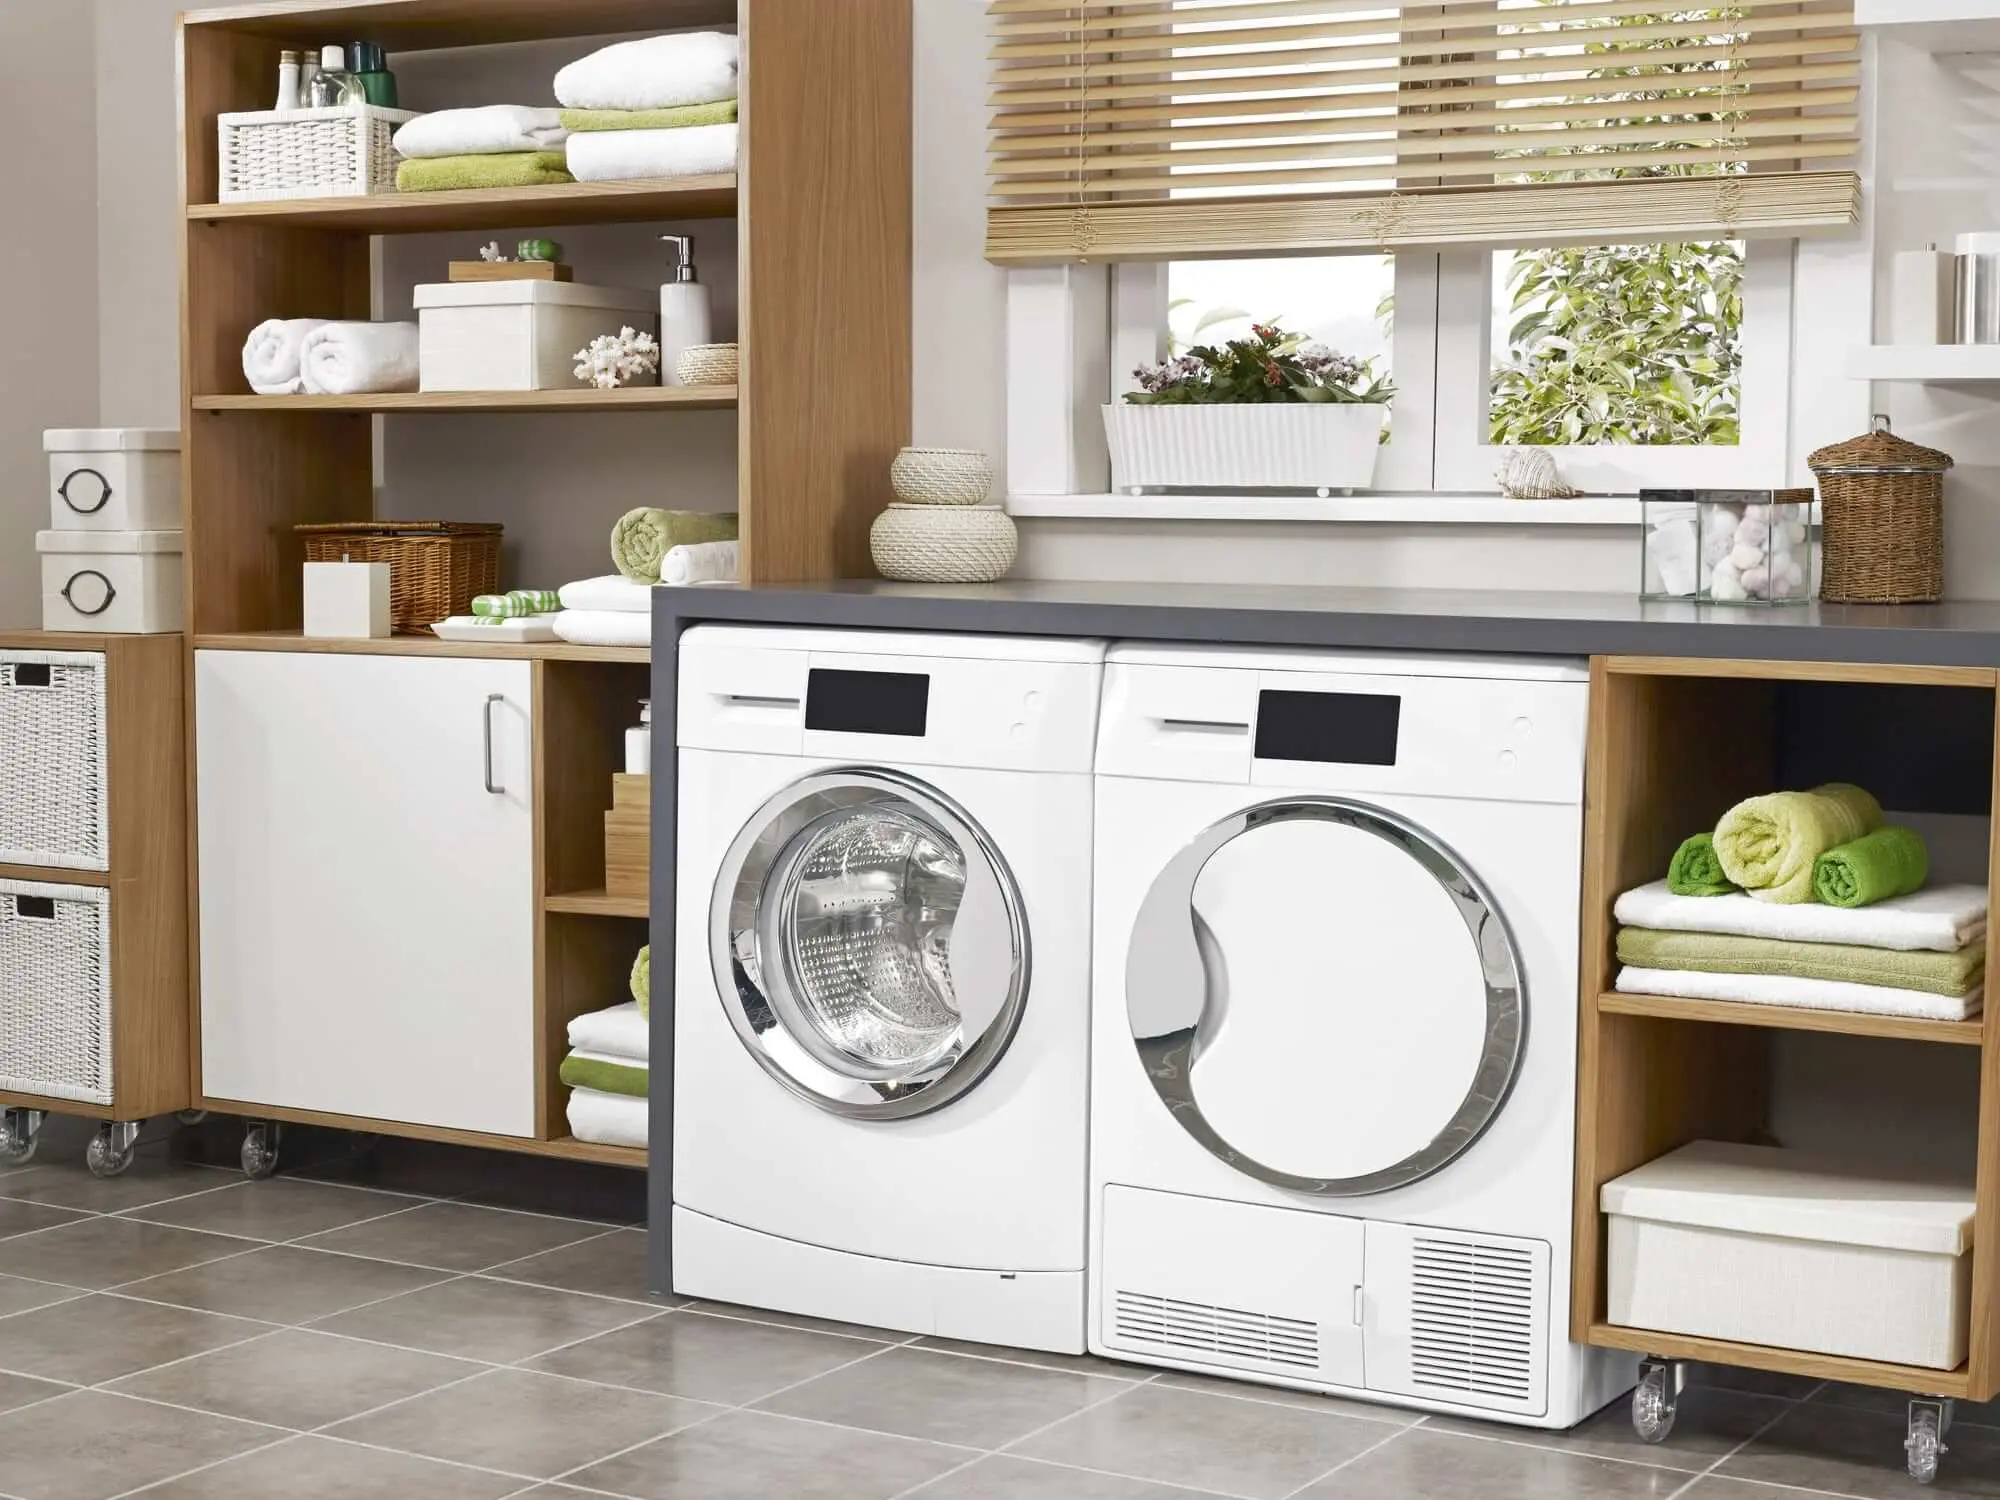 Laundry Room Ventilation iStock 869825978 min min 1